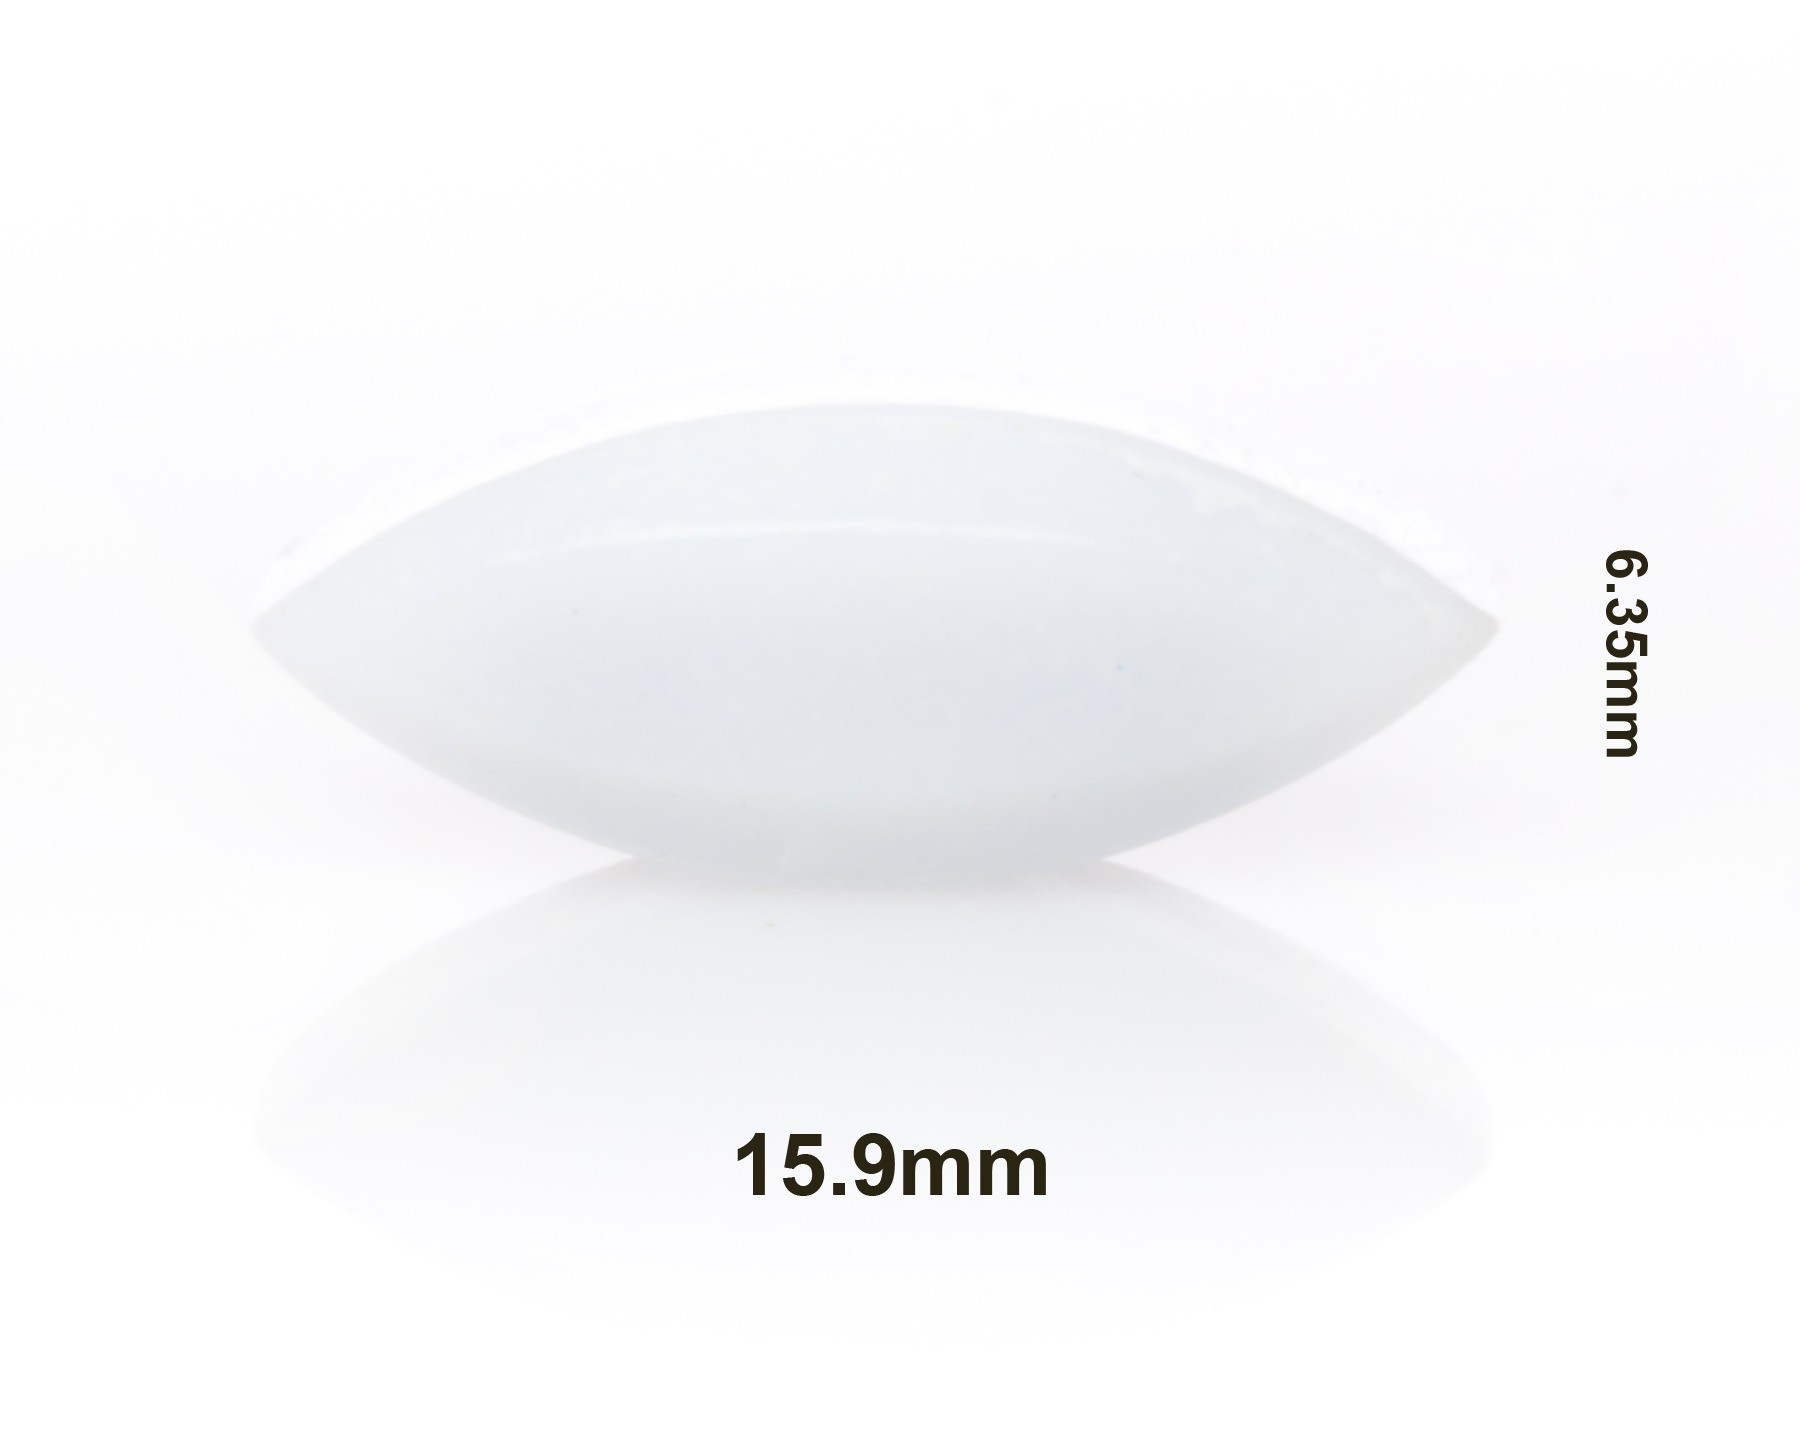 SP Bel-Art Spinbar Teflon Elliptical (Egg-Shaped) Magnetic Stirring Bar; 15.9 x 6.35mm, White